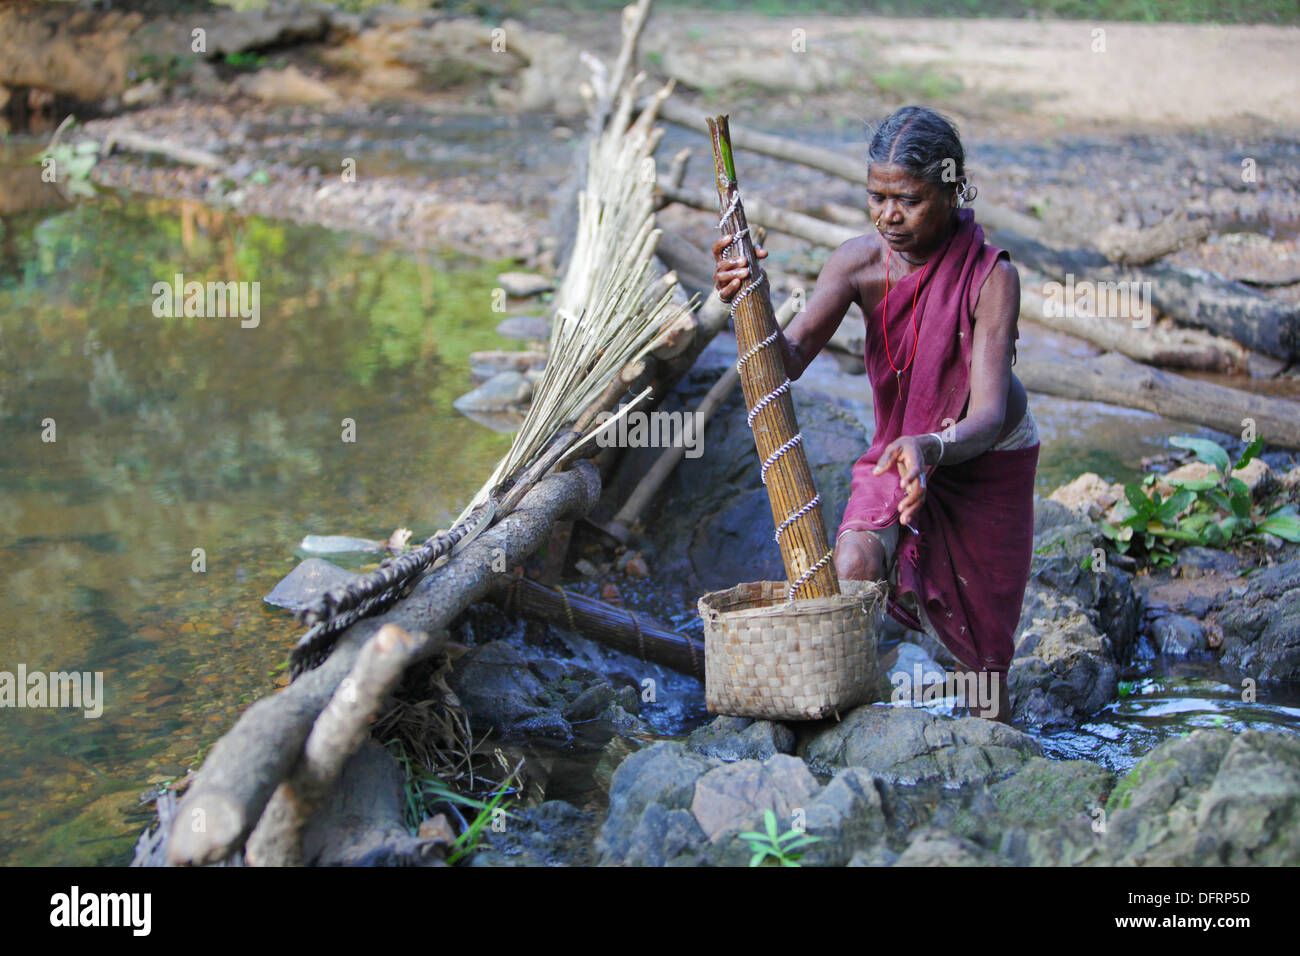 Femme tribal Madia la capture du poisson, Bhamragad, Maharashtra, Inde. Banque D'Images